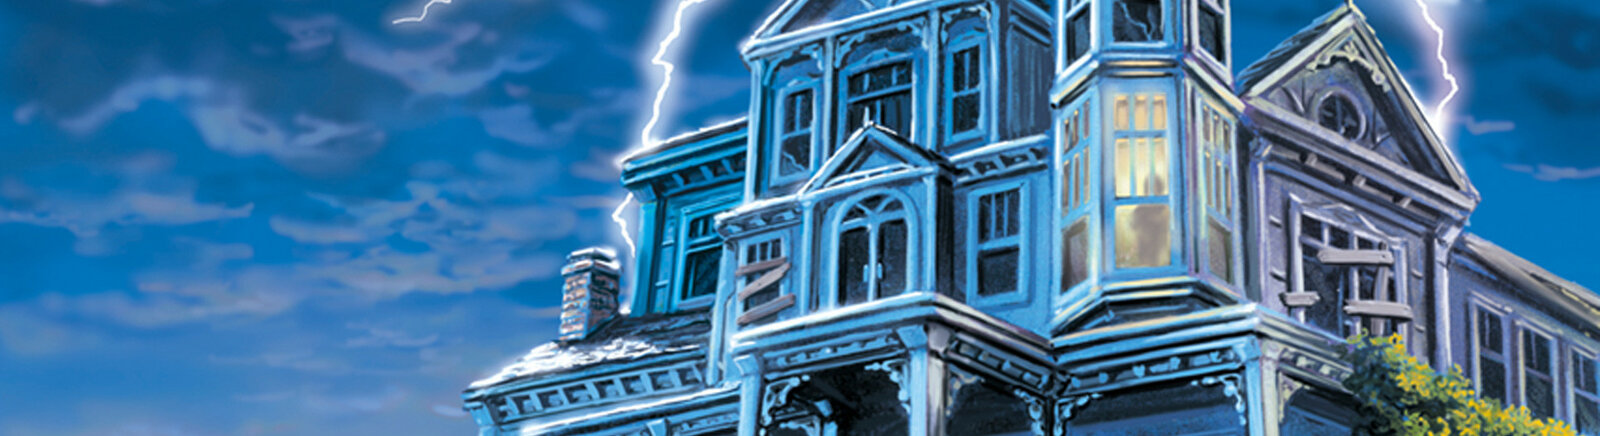 Дата выхода Nancy Drew: Message in a Haunted Mansion (Nancy Drew 3)  на PC и Game Boy Advance в России и во всем мире